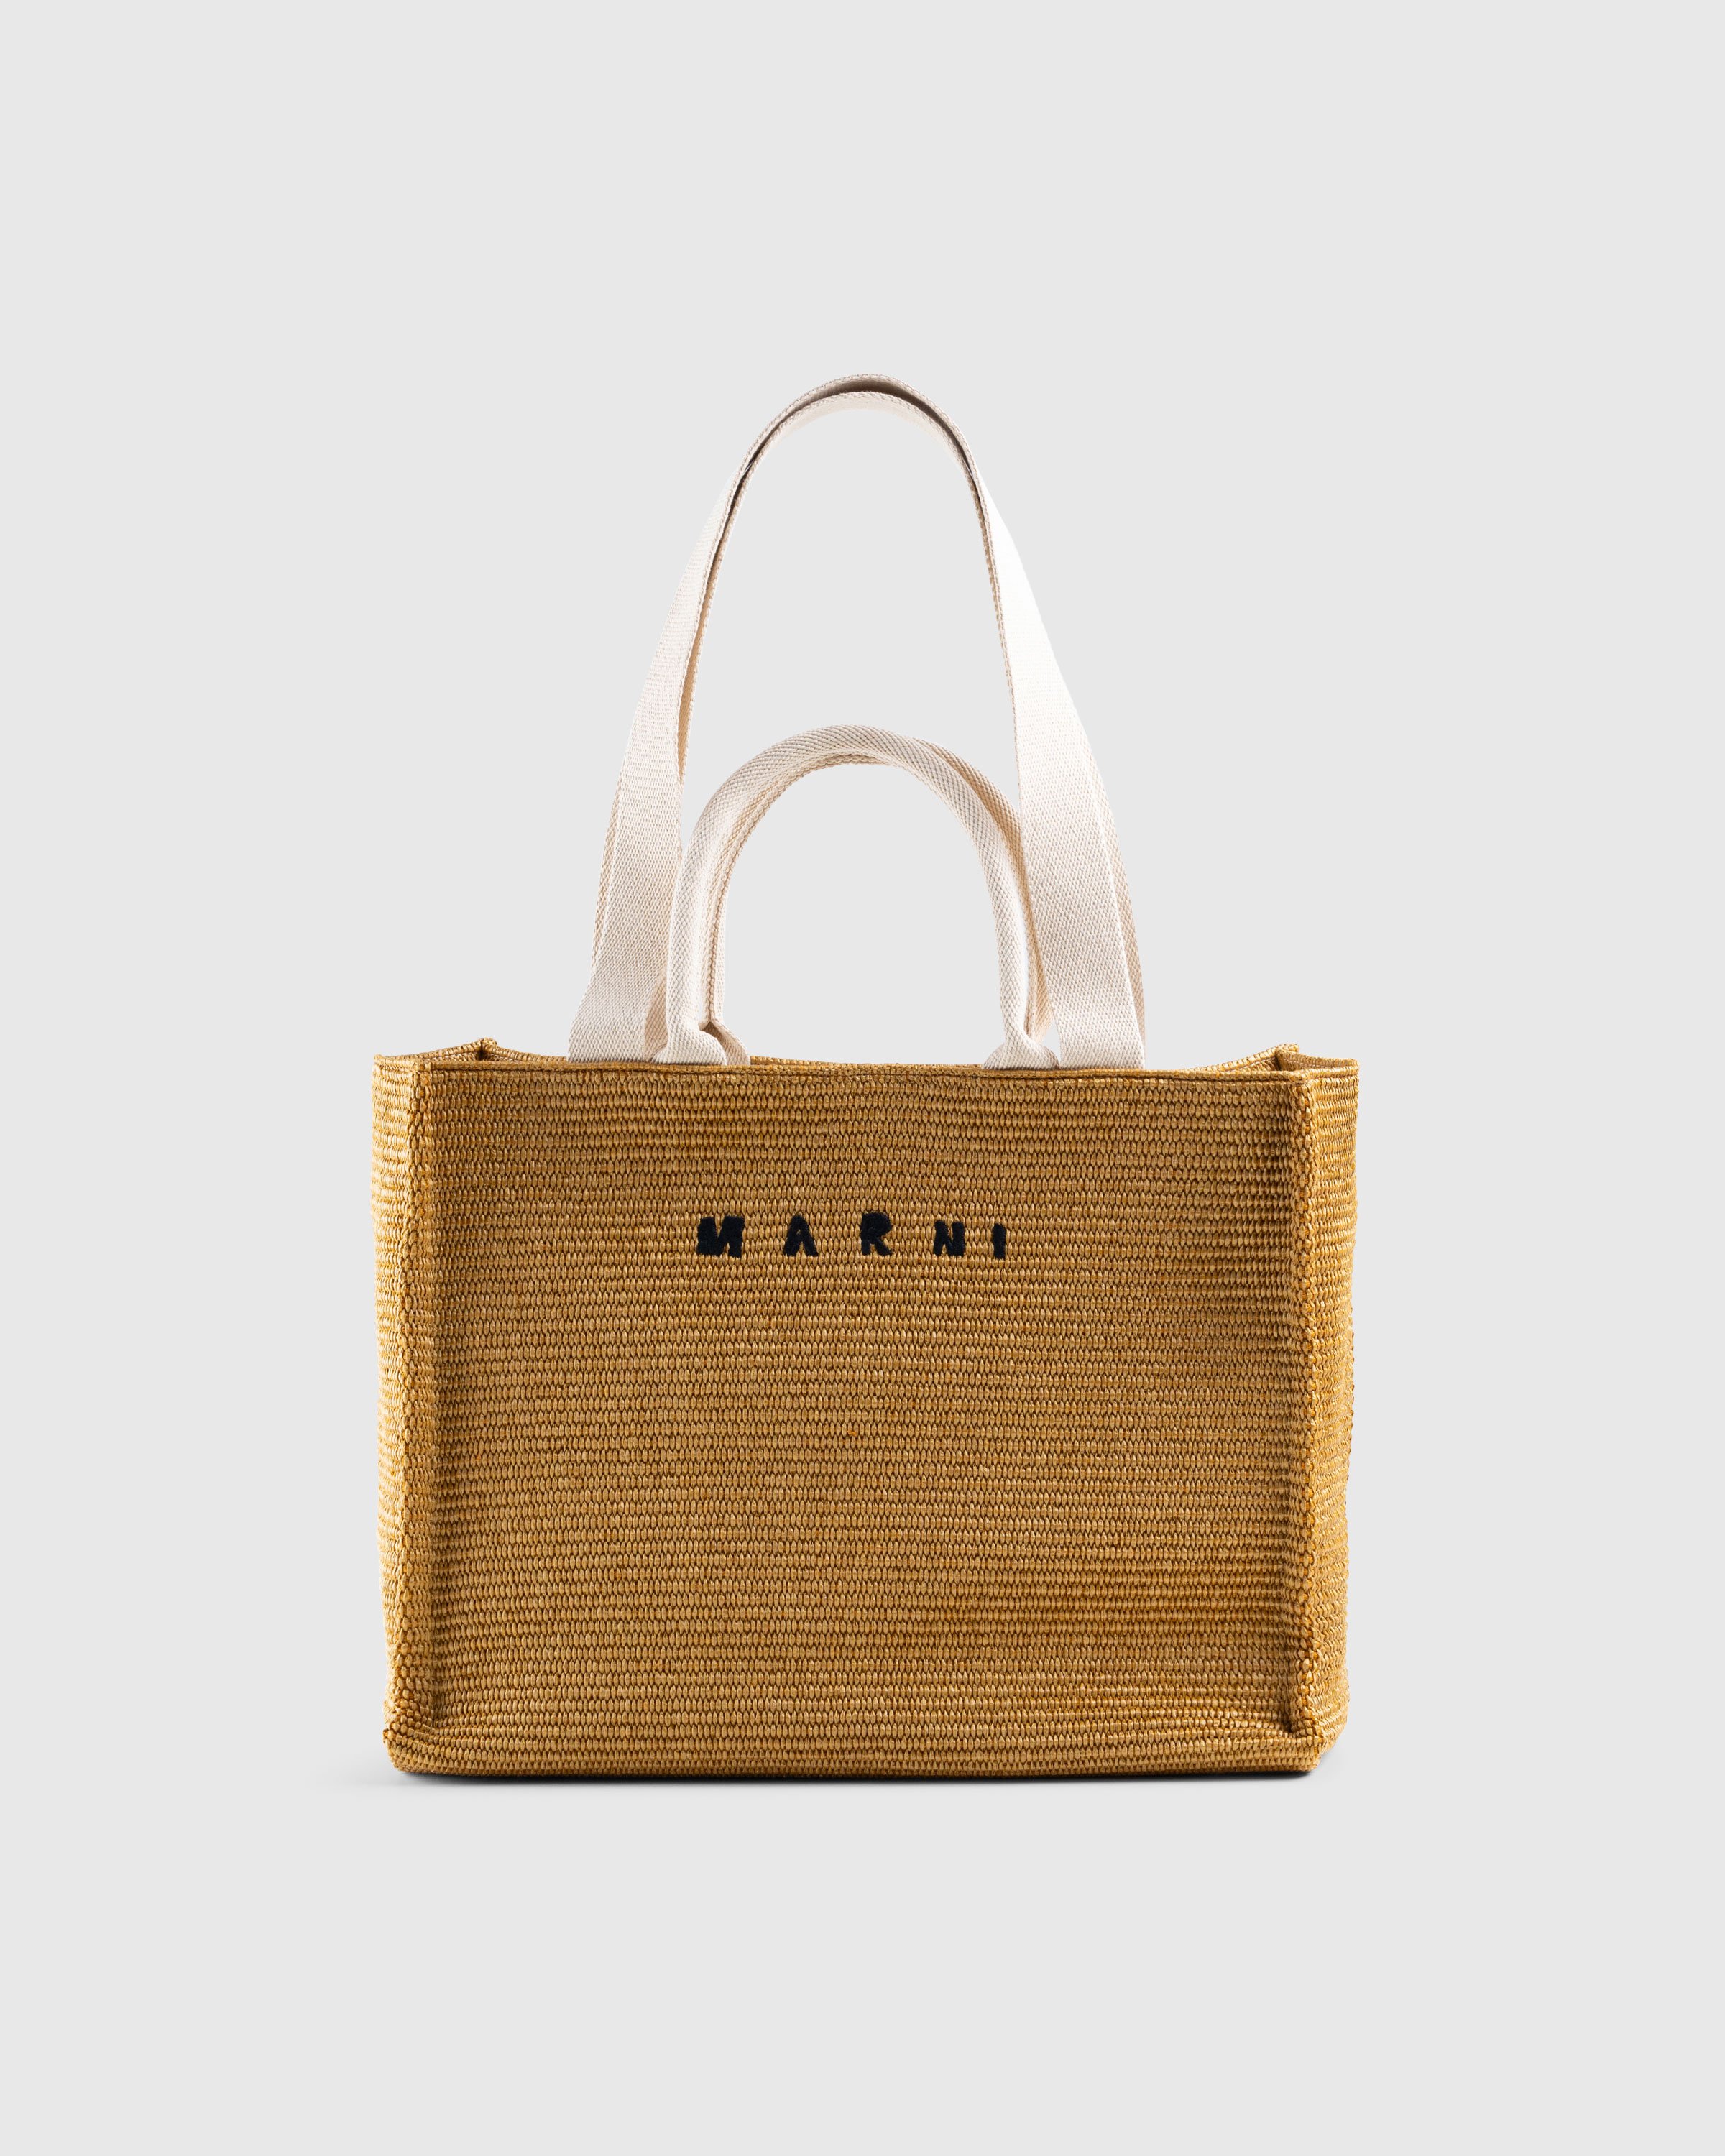 Marni - Large Raffia Tote Bag Raw Sienna/Natural - Accessories - Brown - Image 1